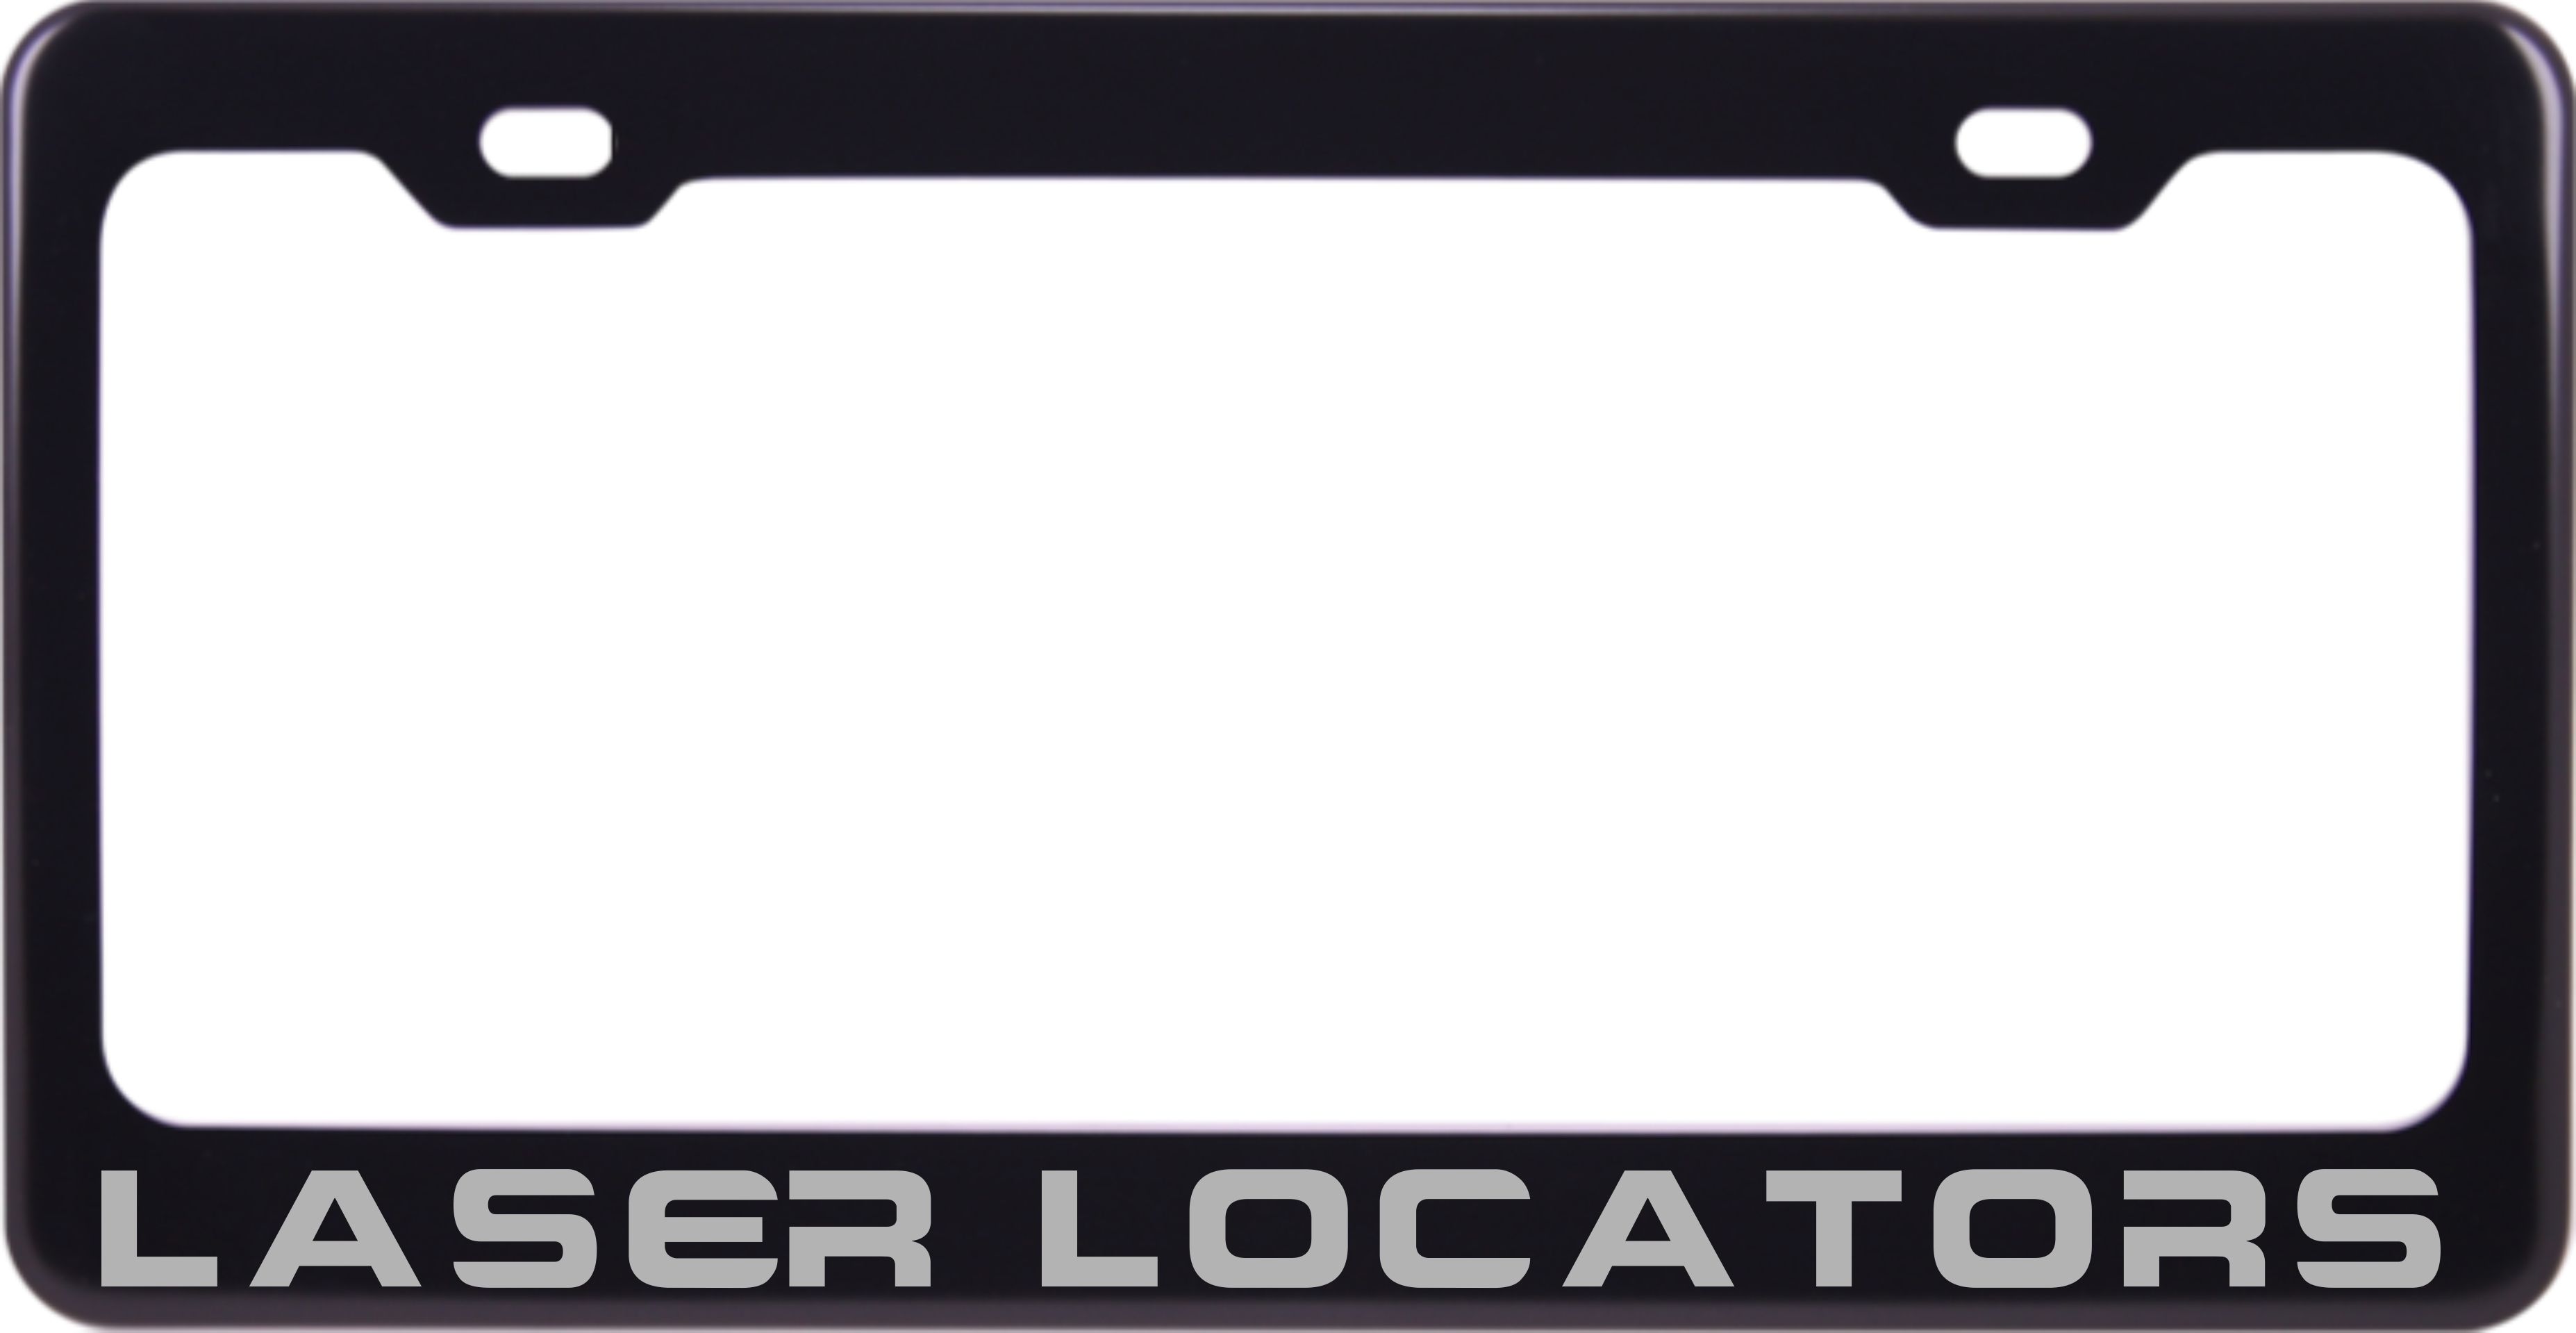 Laser Locators - Anodized Aluminum License Plate Frame